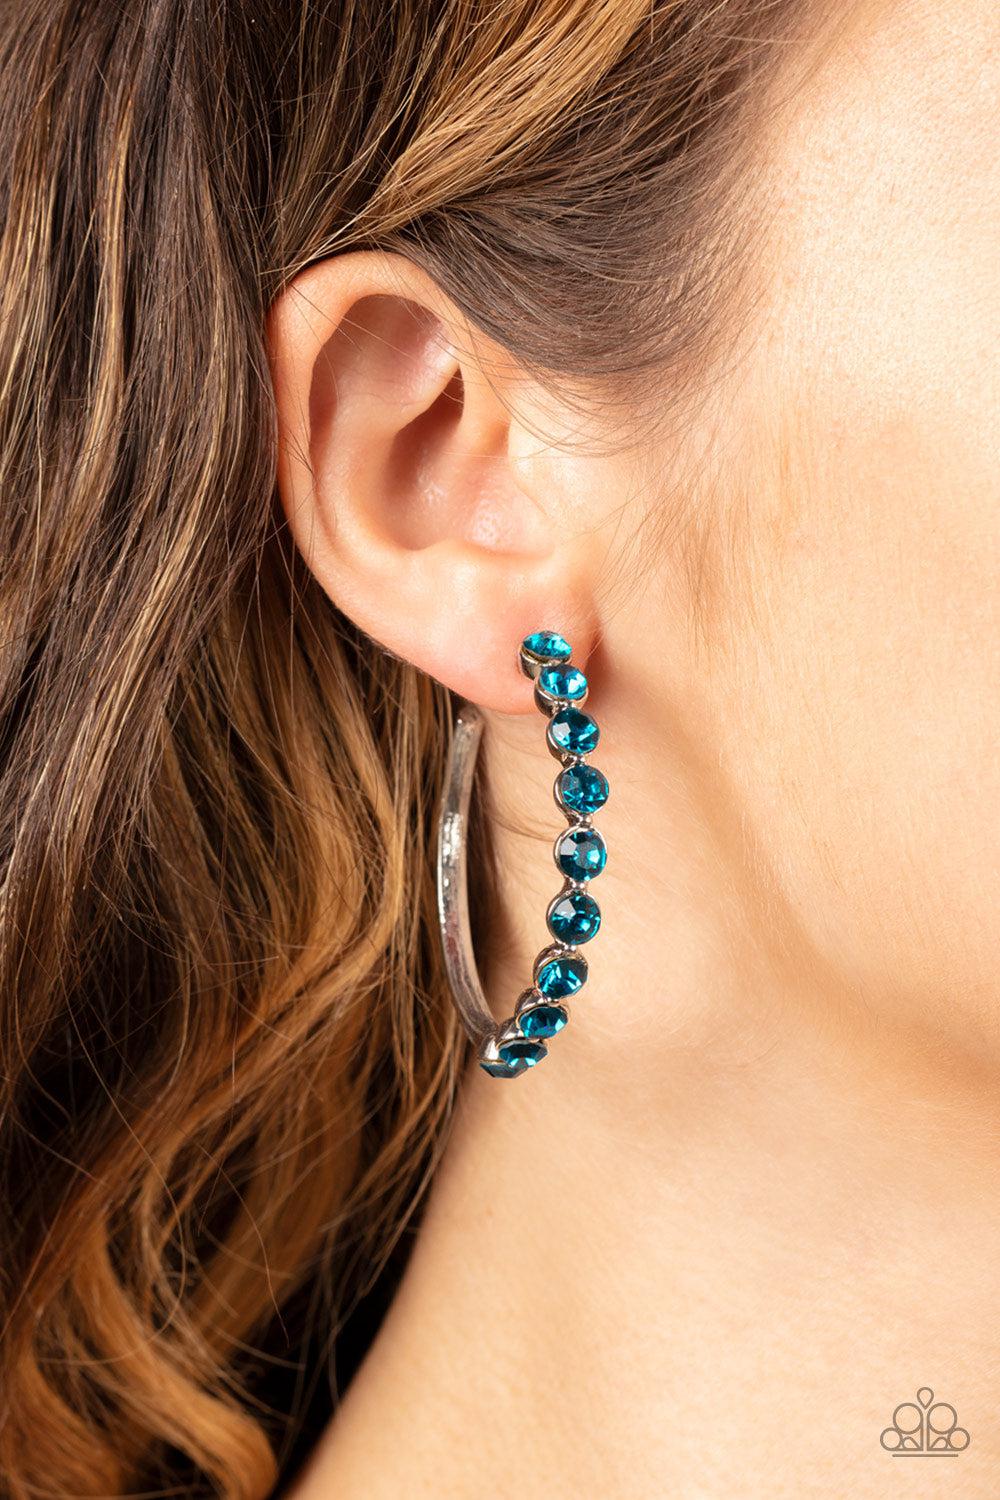 Photo Finish Blue Rhinestone Hoop Earrings - Paparazzi Accessories-on model - CarasShop.com - $5 Jewelry by Cara Jewels